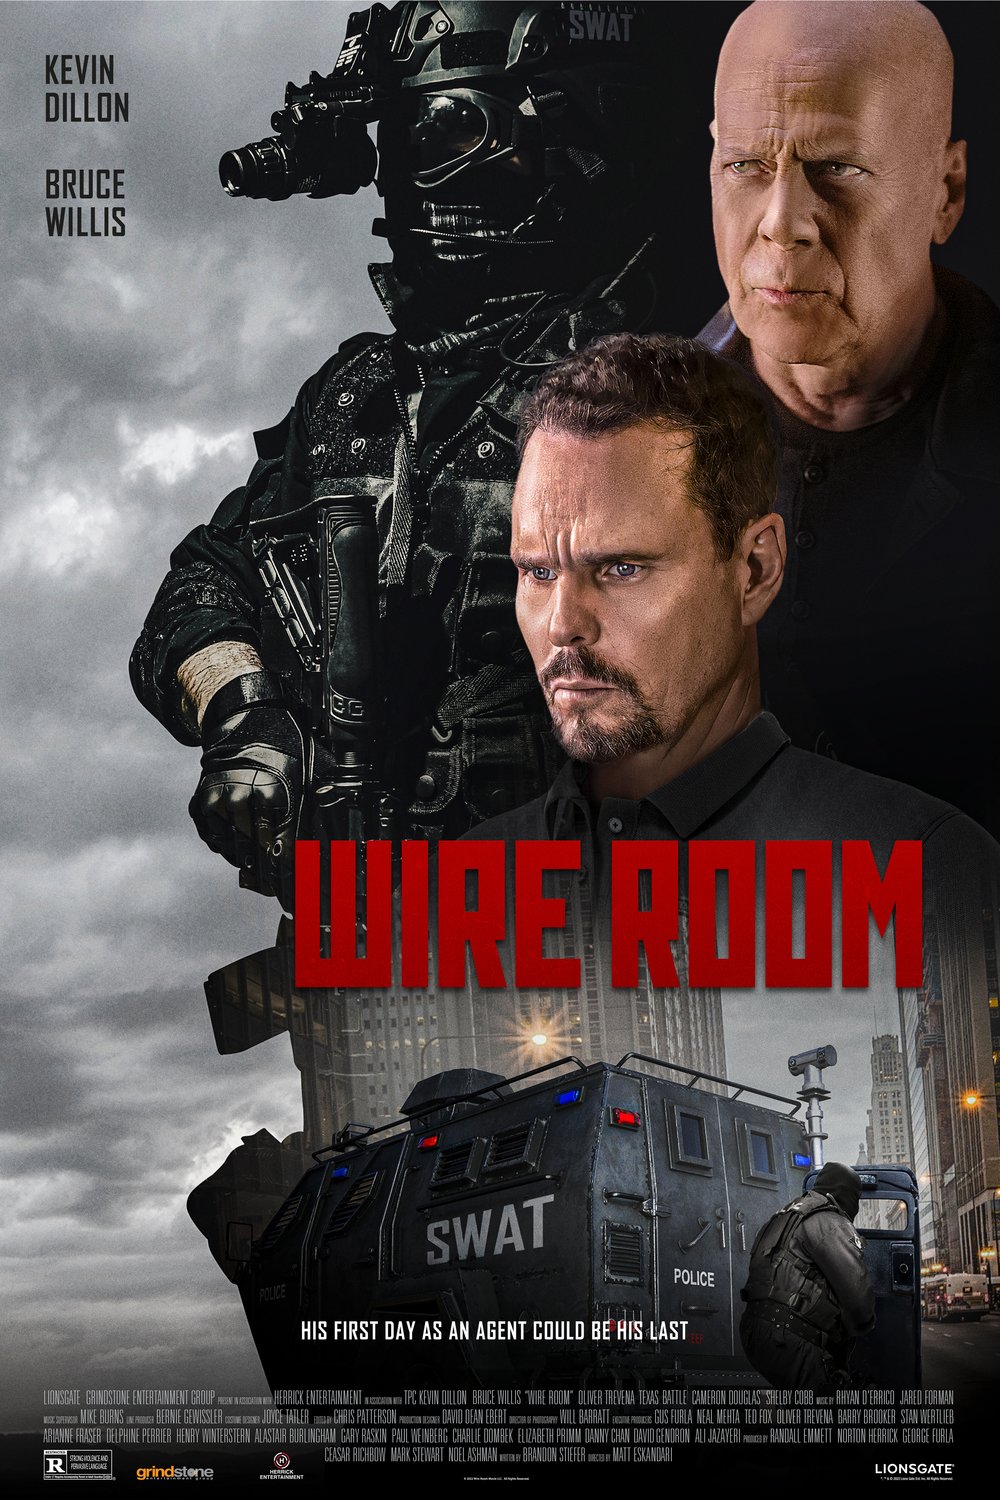 L'affiche du film Wire Room